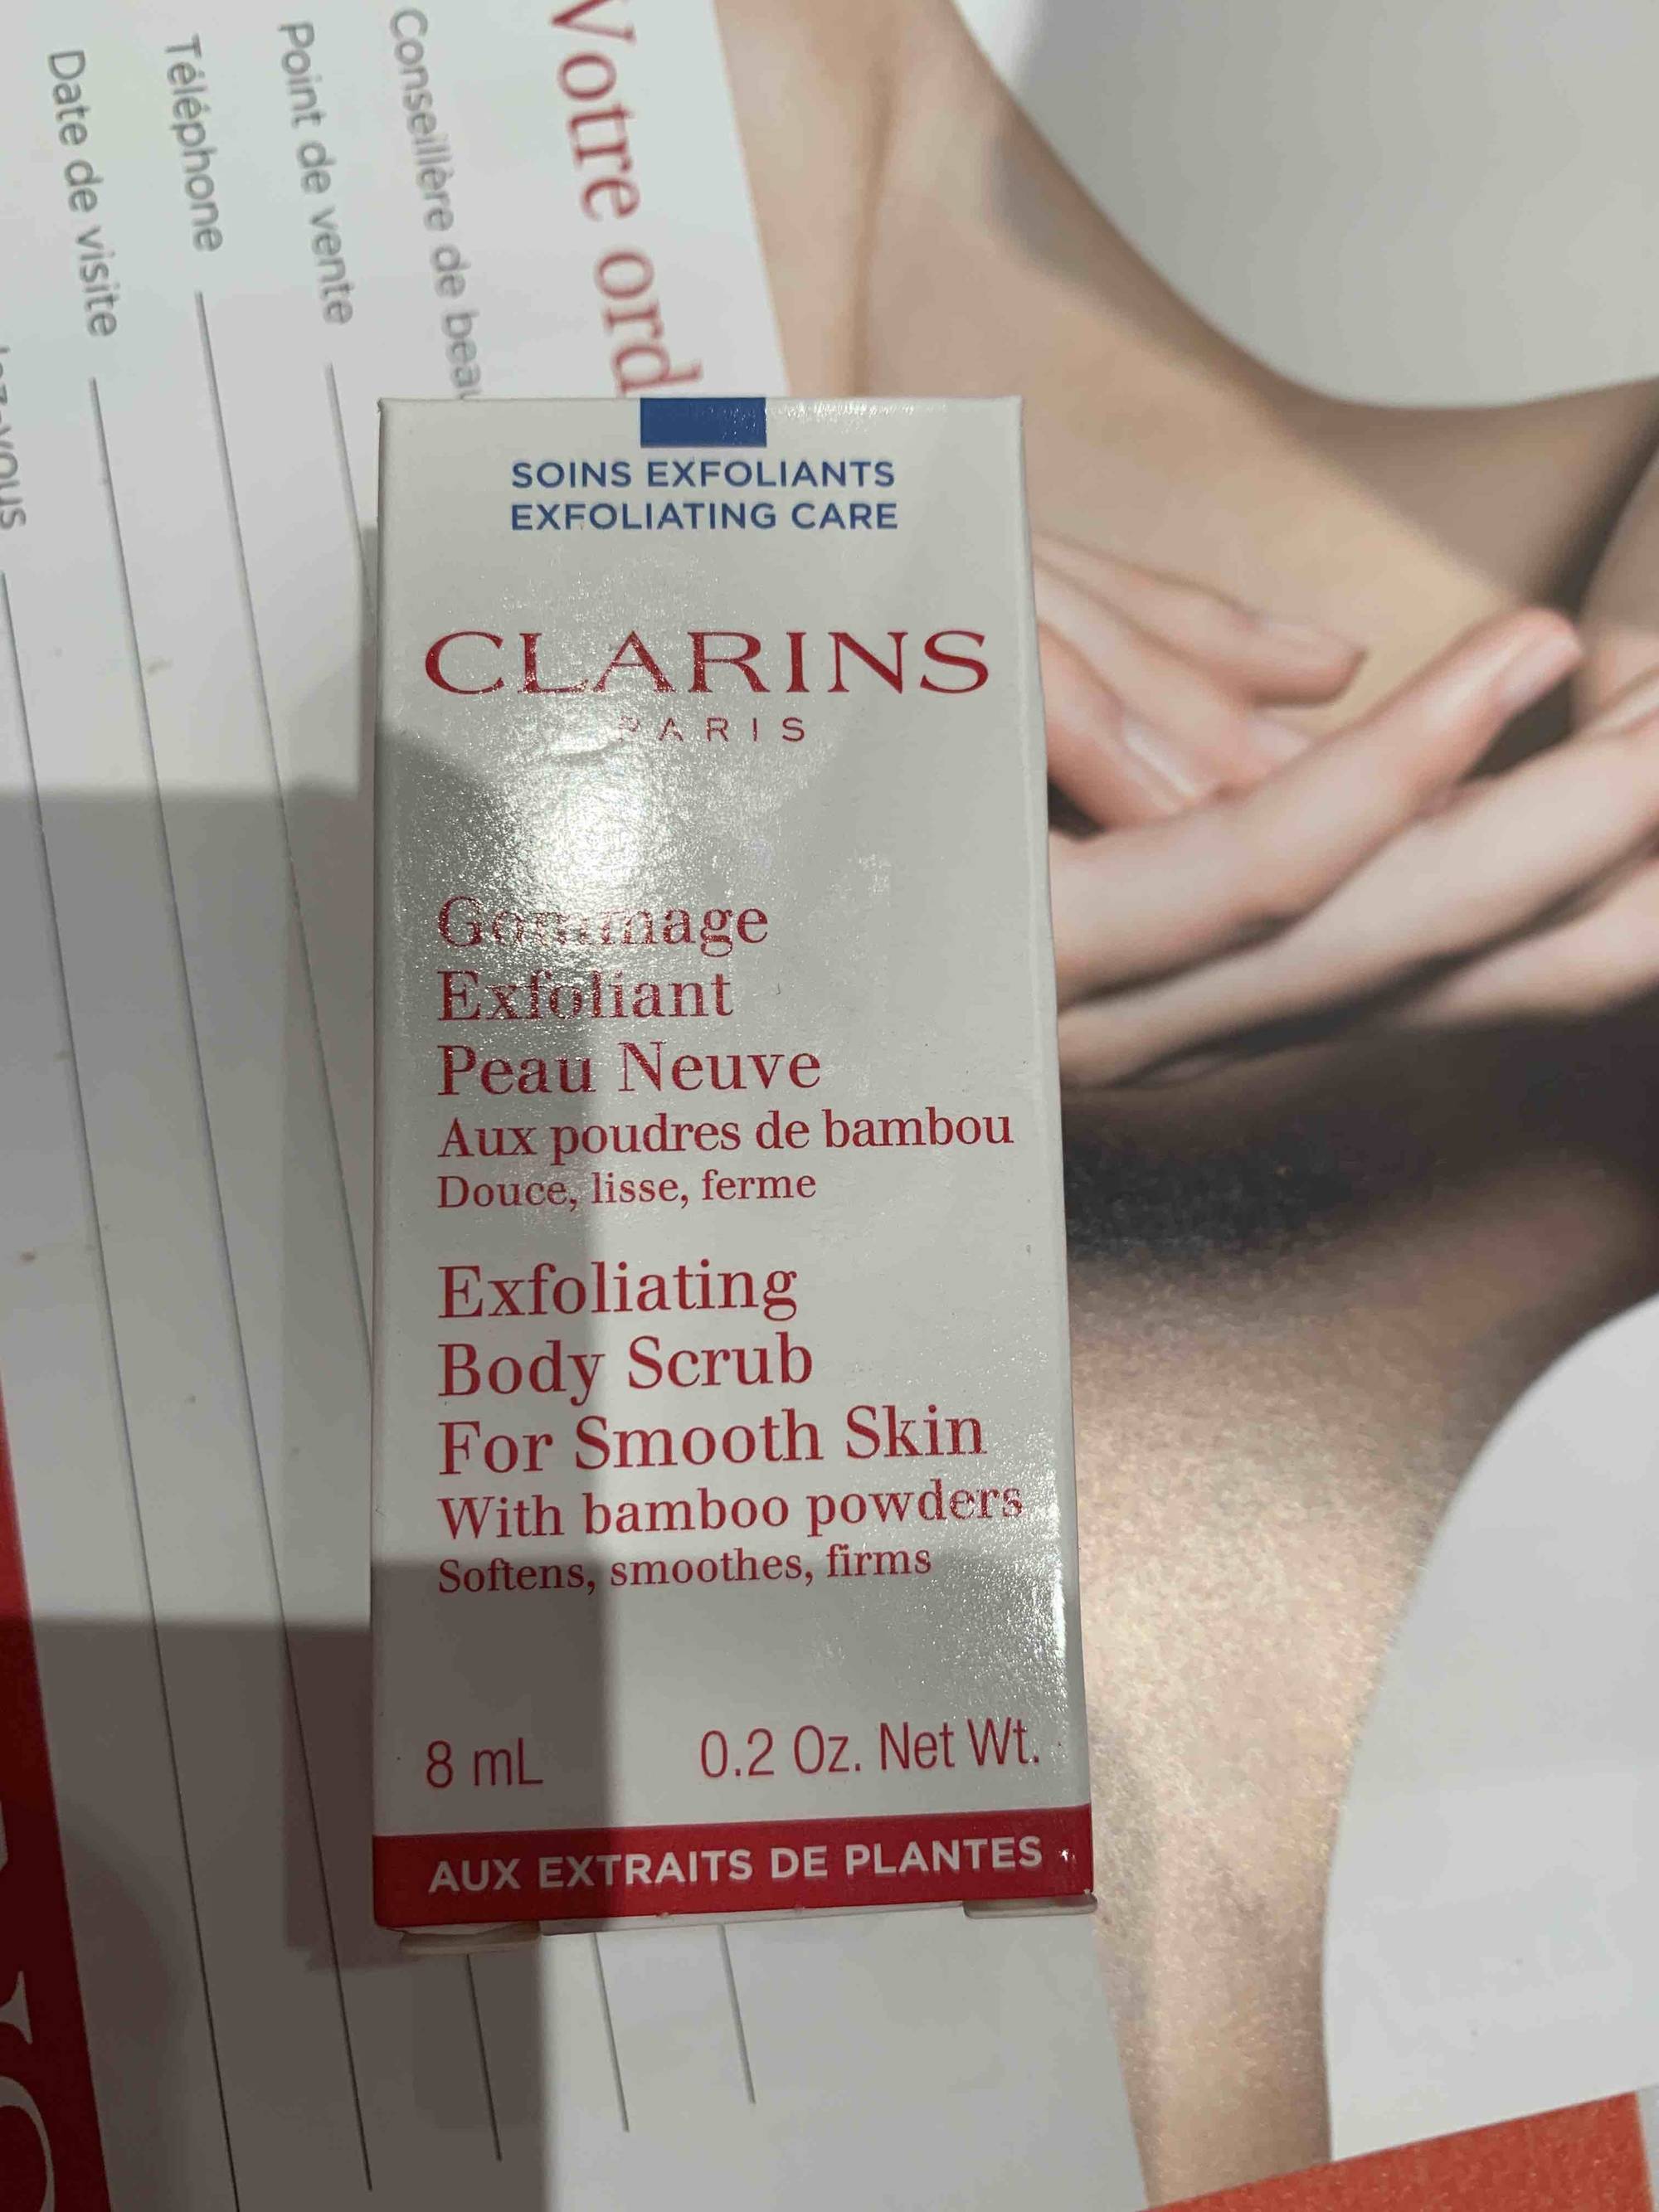 CLARINS - Gommage exfoliant peau neuve